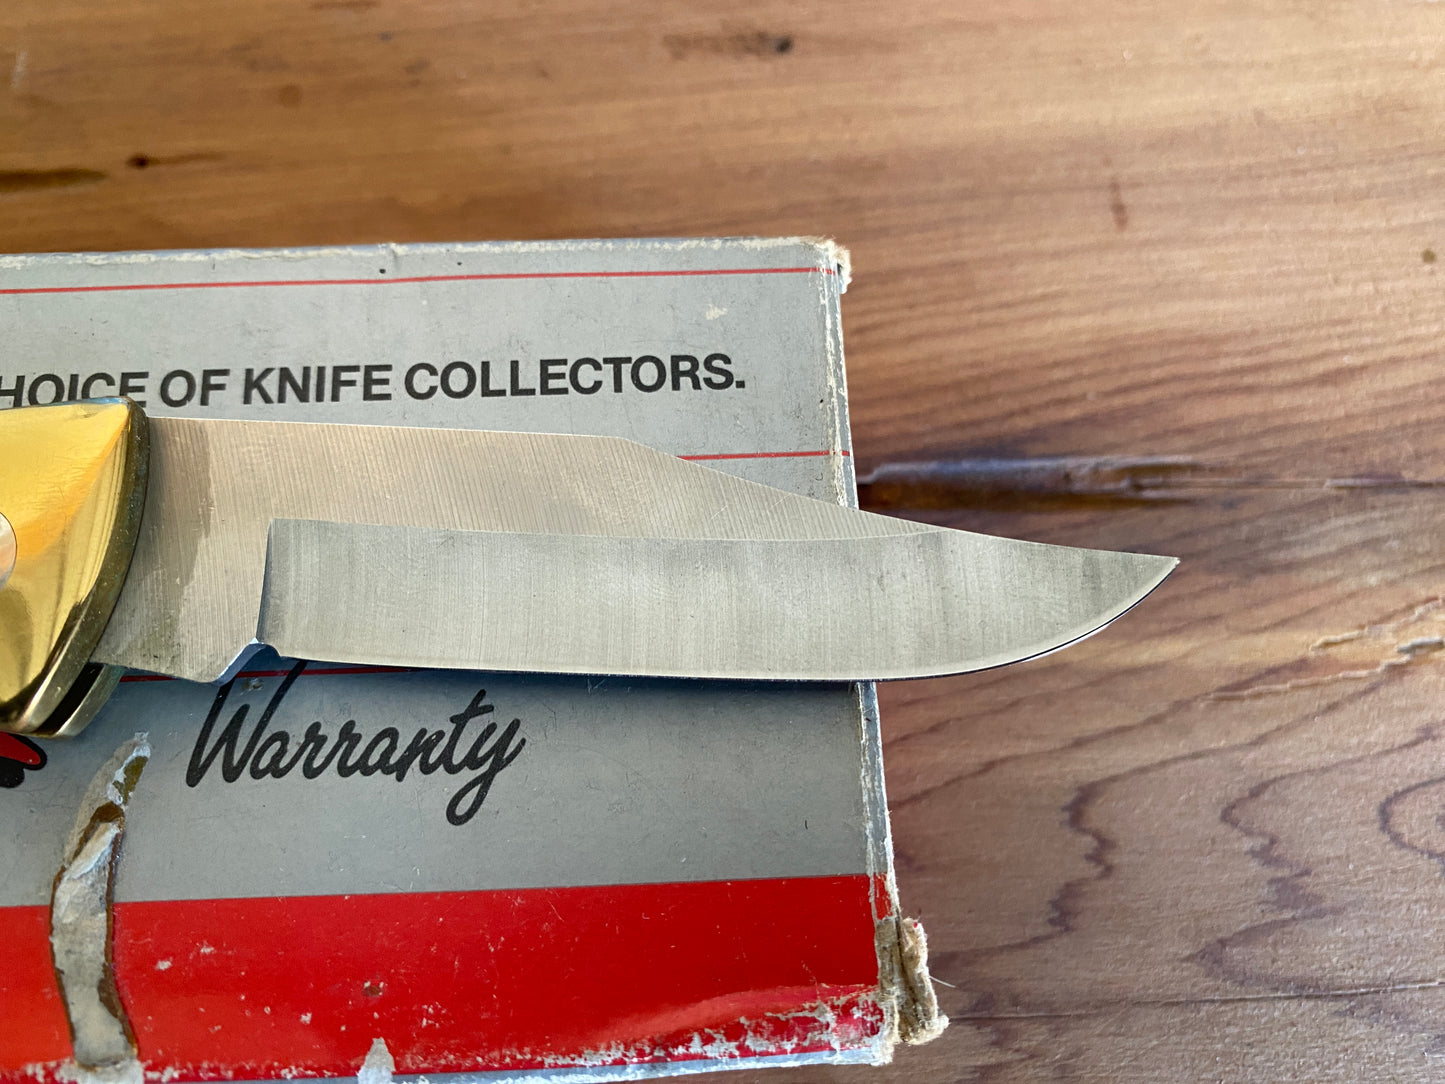 Case XX Changer pocket Knife